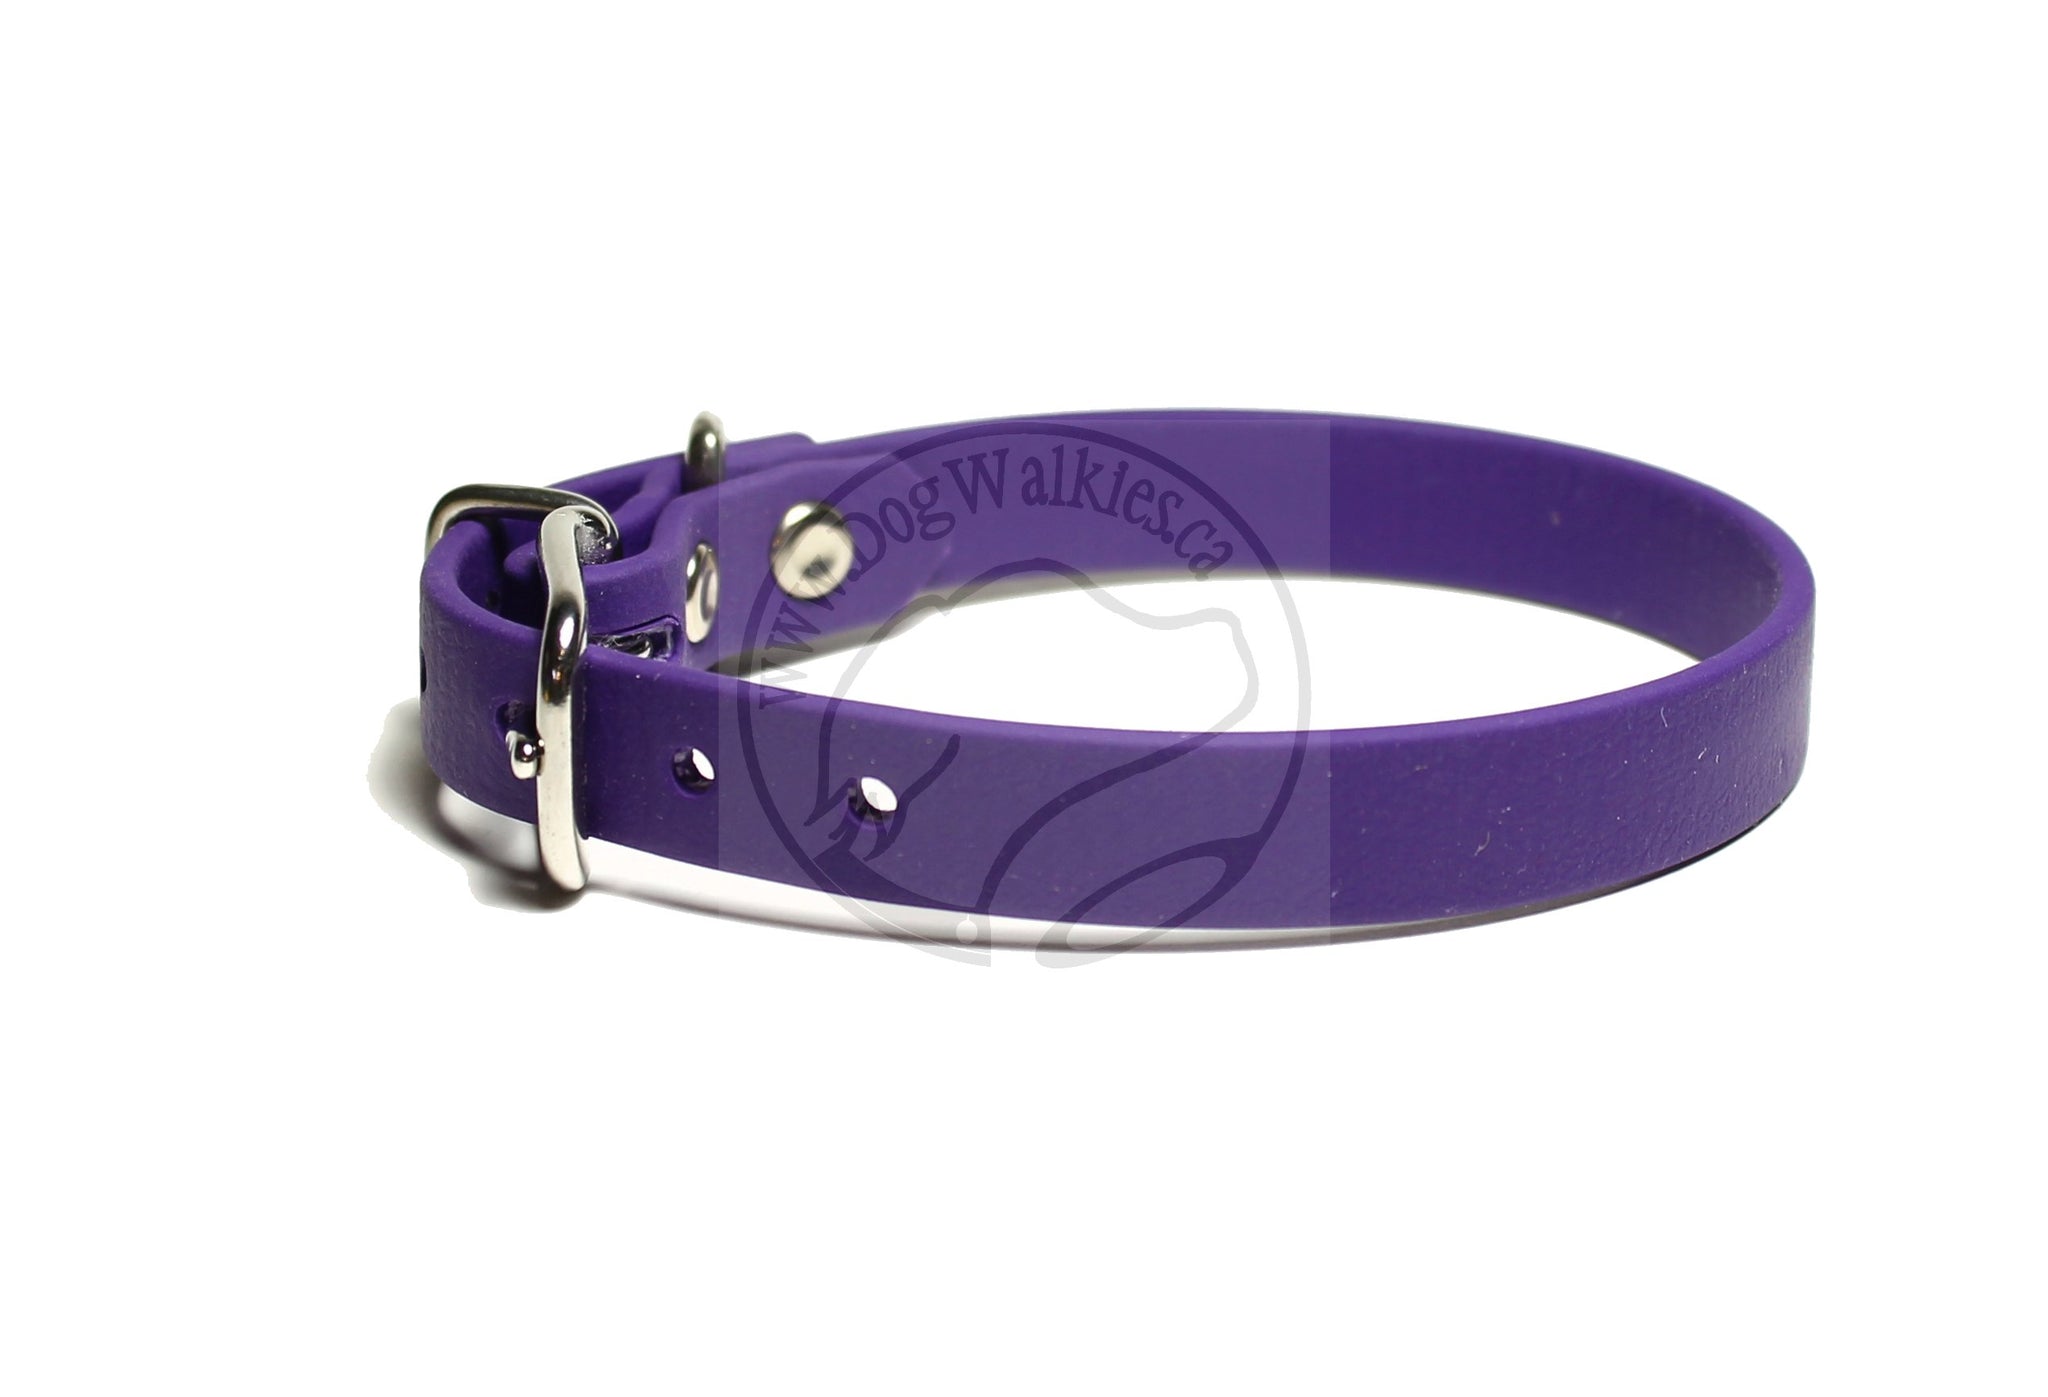 Royal Purple Biothane Small Dog Collar - 1/2" (12mm) wide